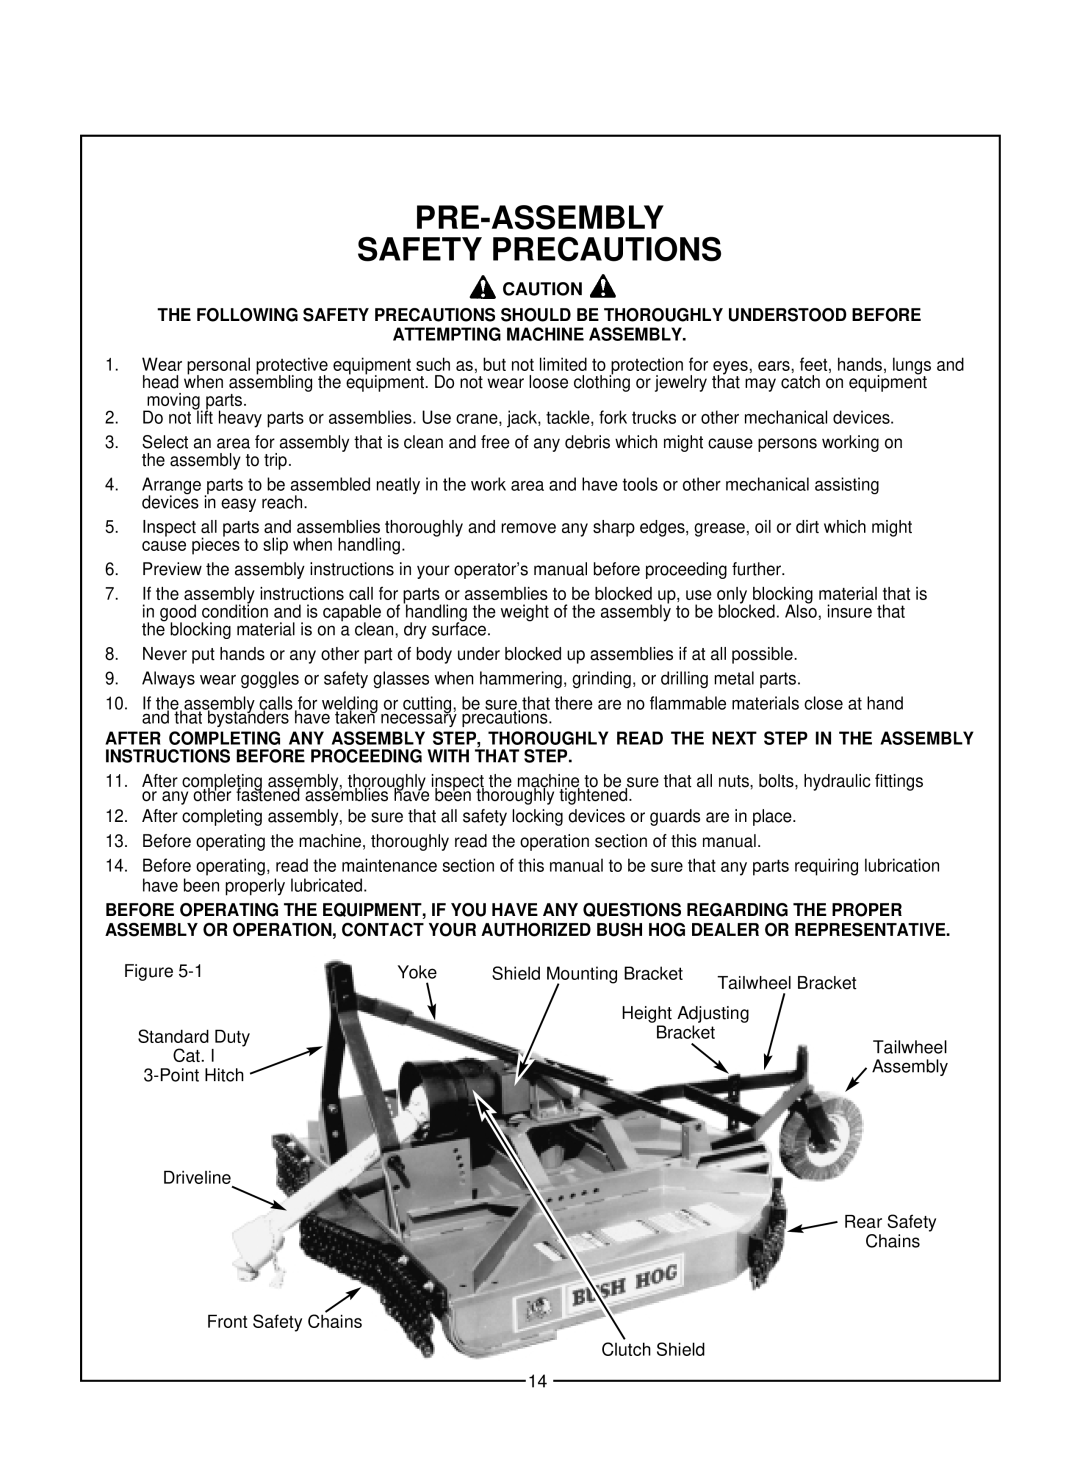 Bush Hog 305, 306 manual Pre-Assembly Safety Precautions 